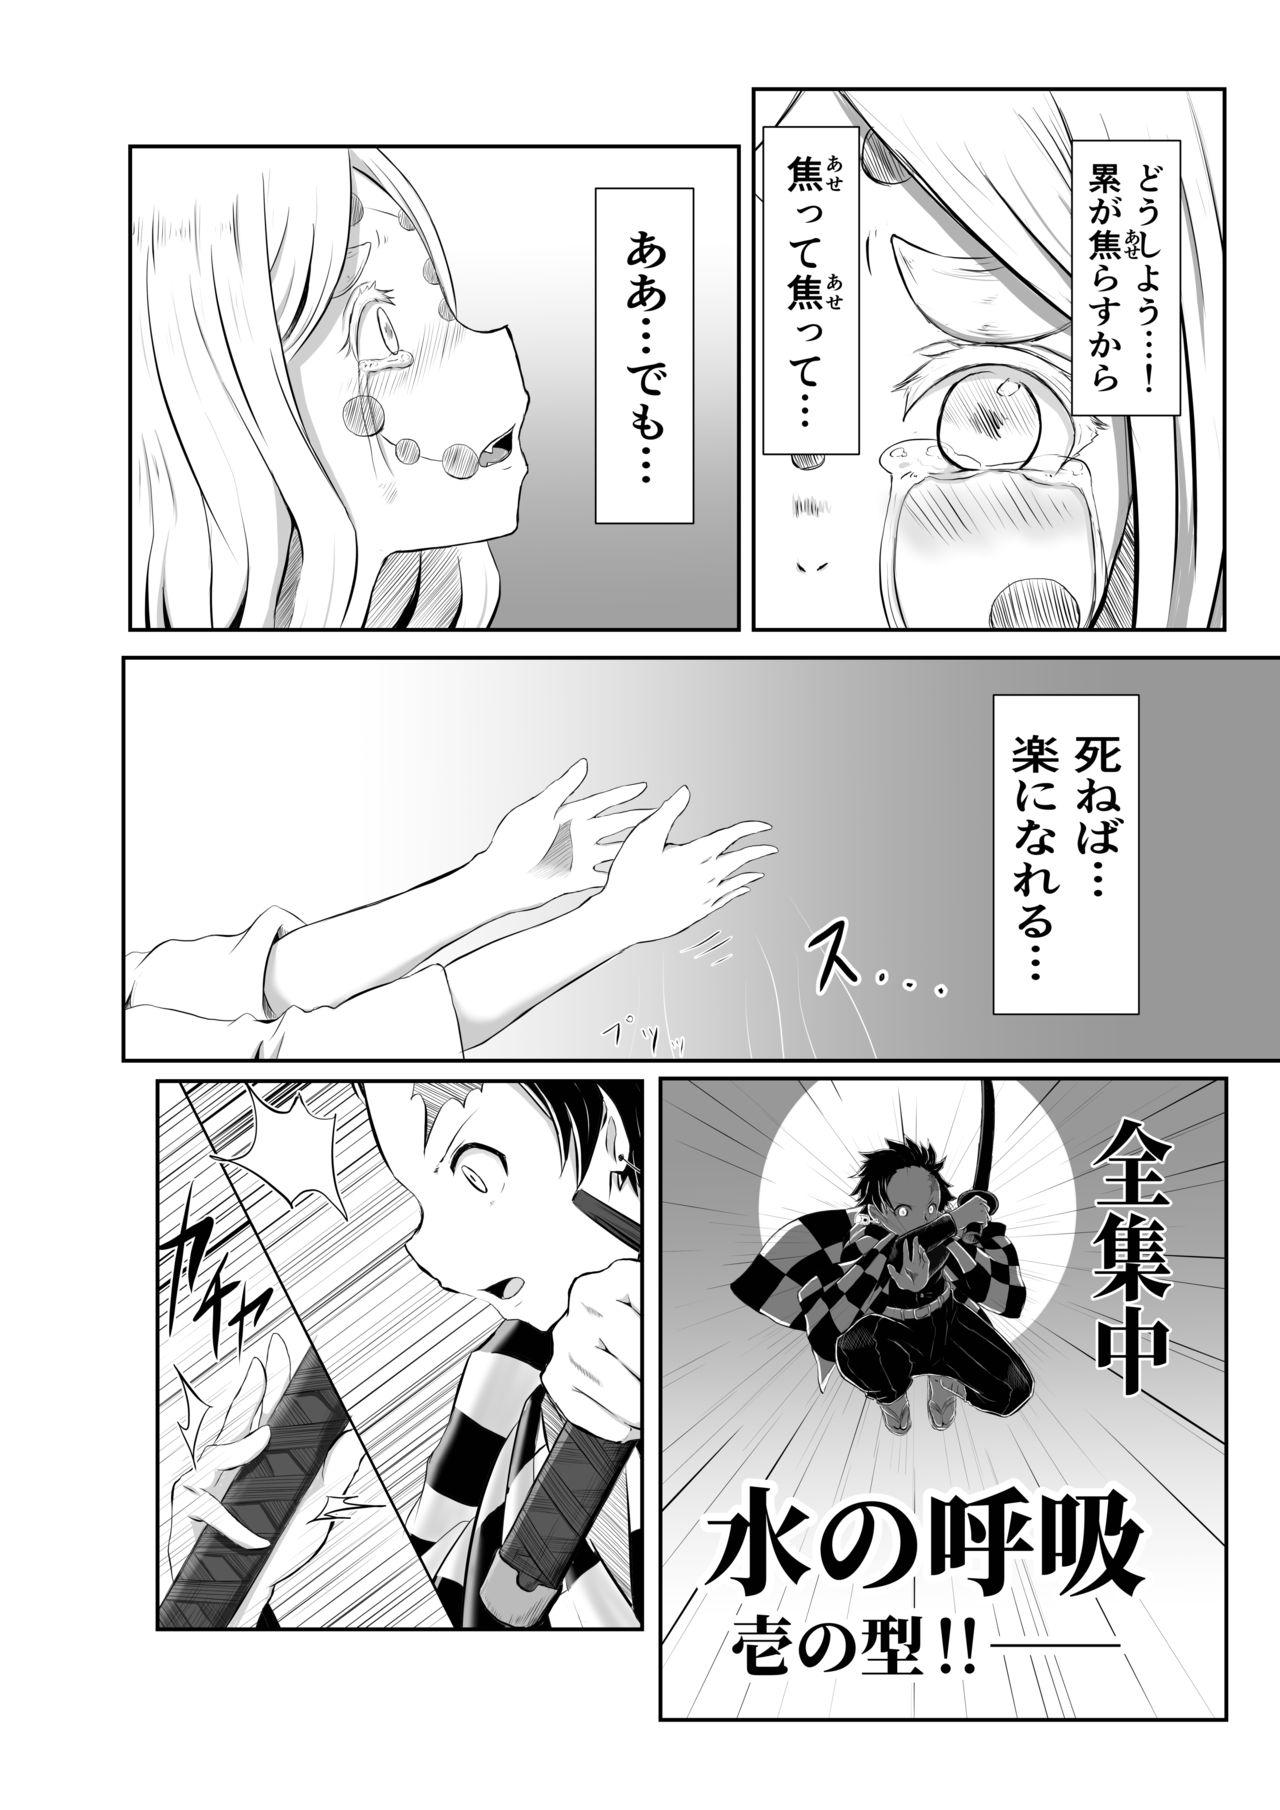 Anime Hinokami Sex. - Kimetsu no yaiba | demon slayer Leaked - Page 2